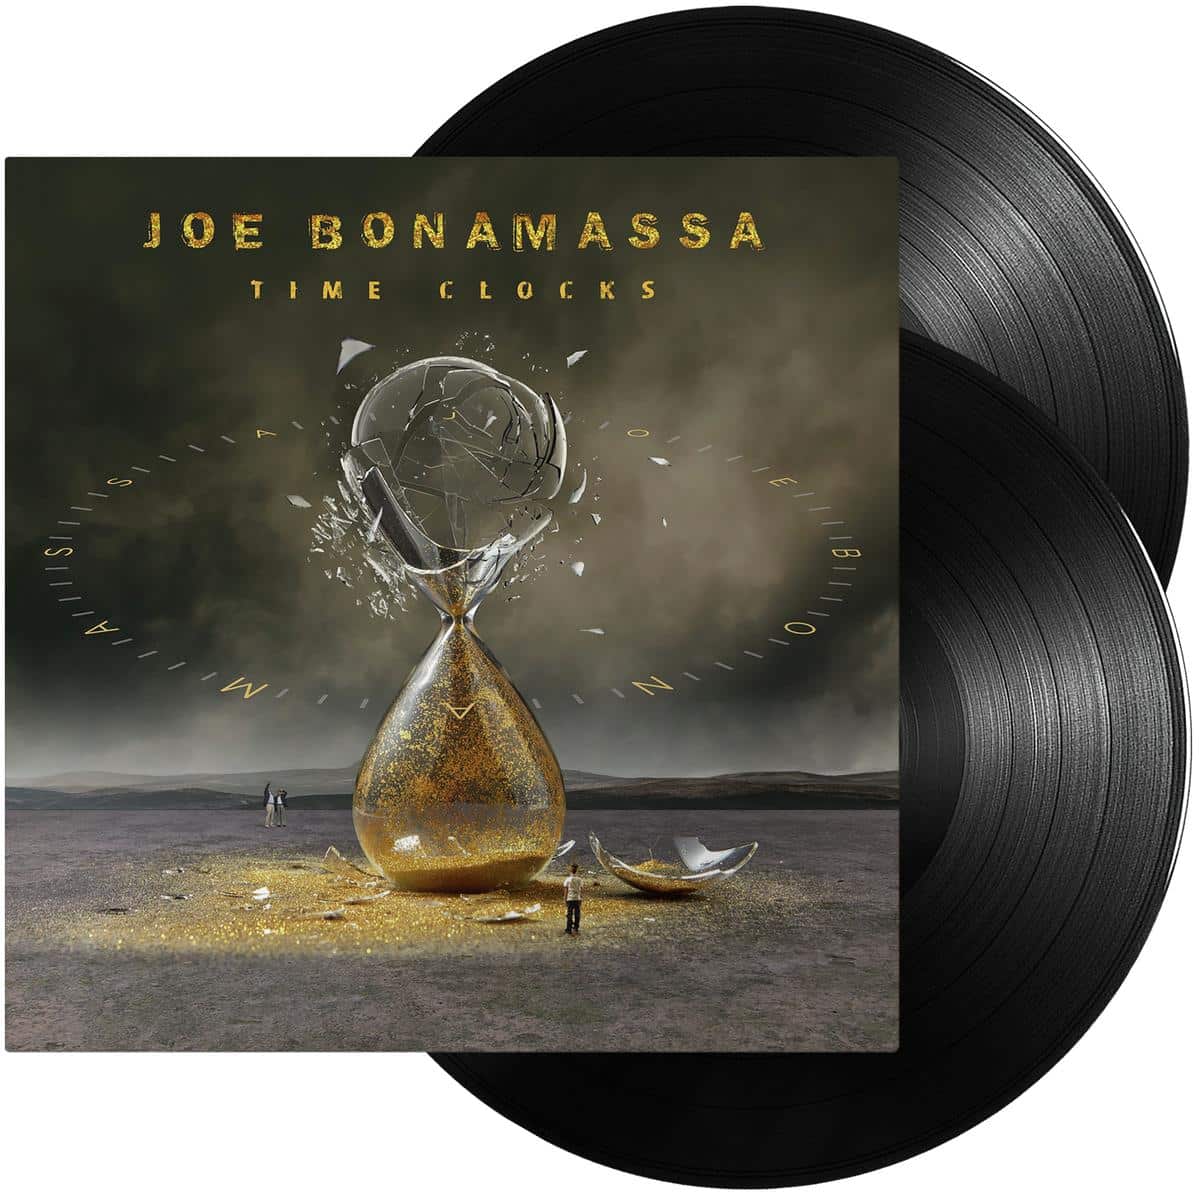 JOE BONNAMASSA - TIME CLOCKS